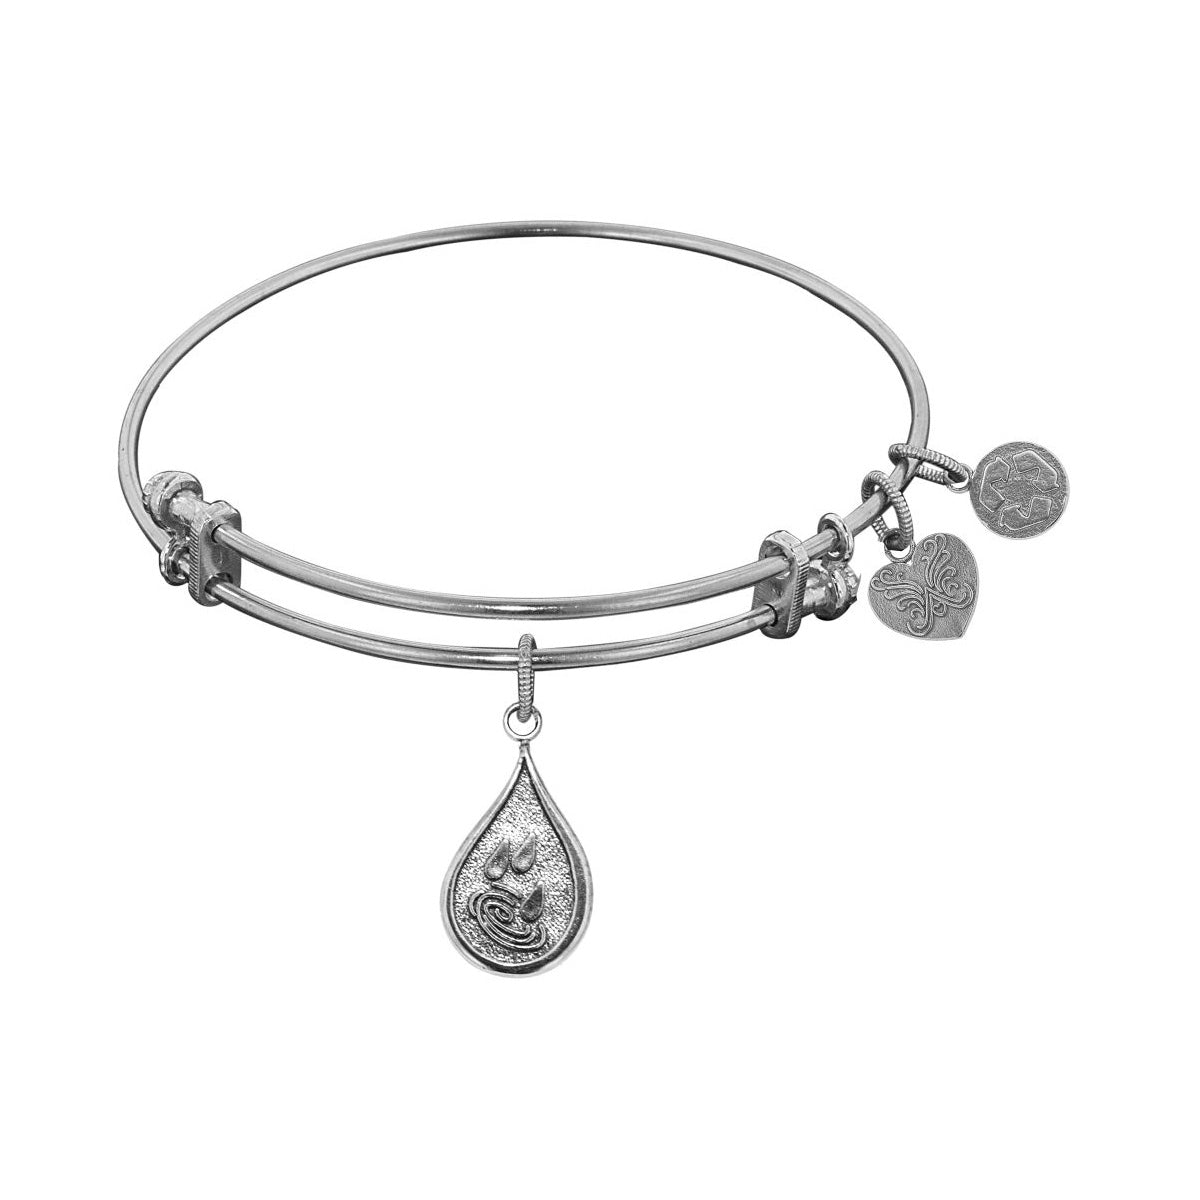 Stipple Finish Brass Water Angelica Bangle Bracelet, 7.25" fine designer jewelry for men and women